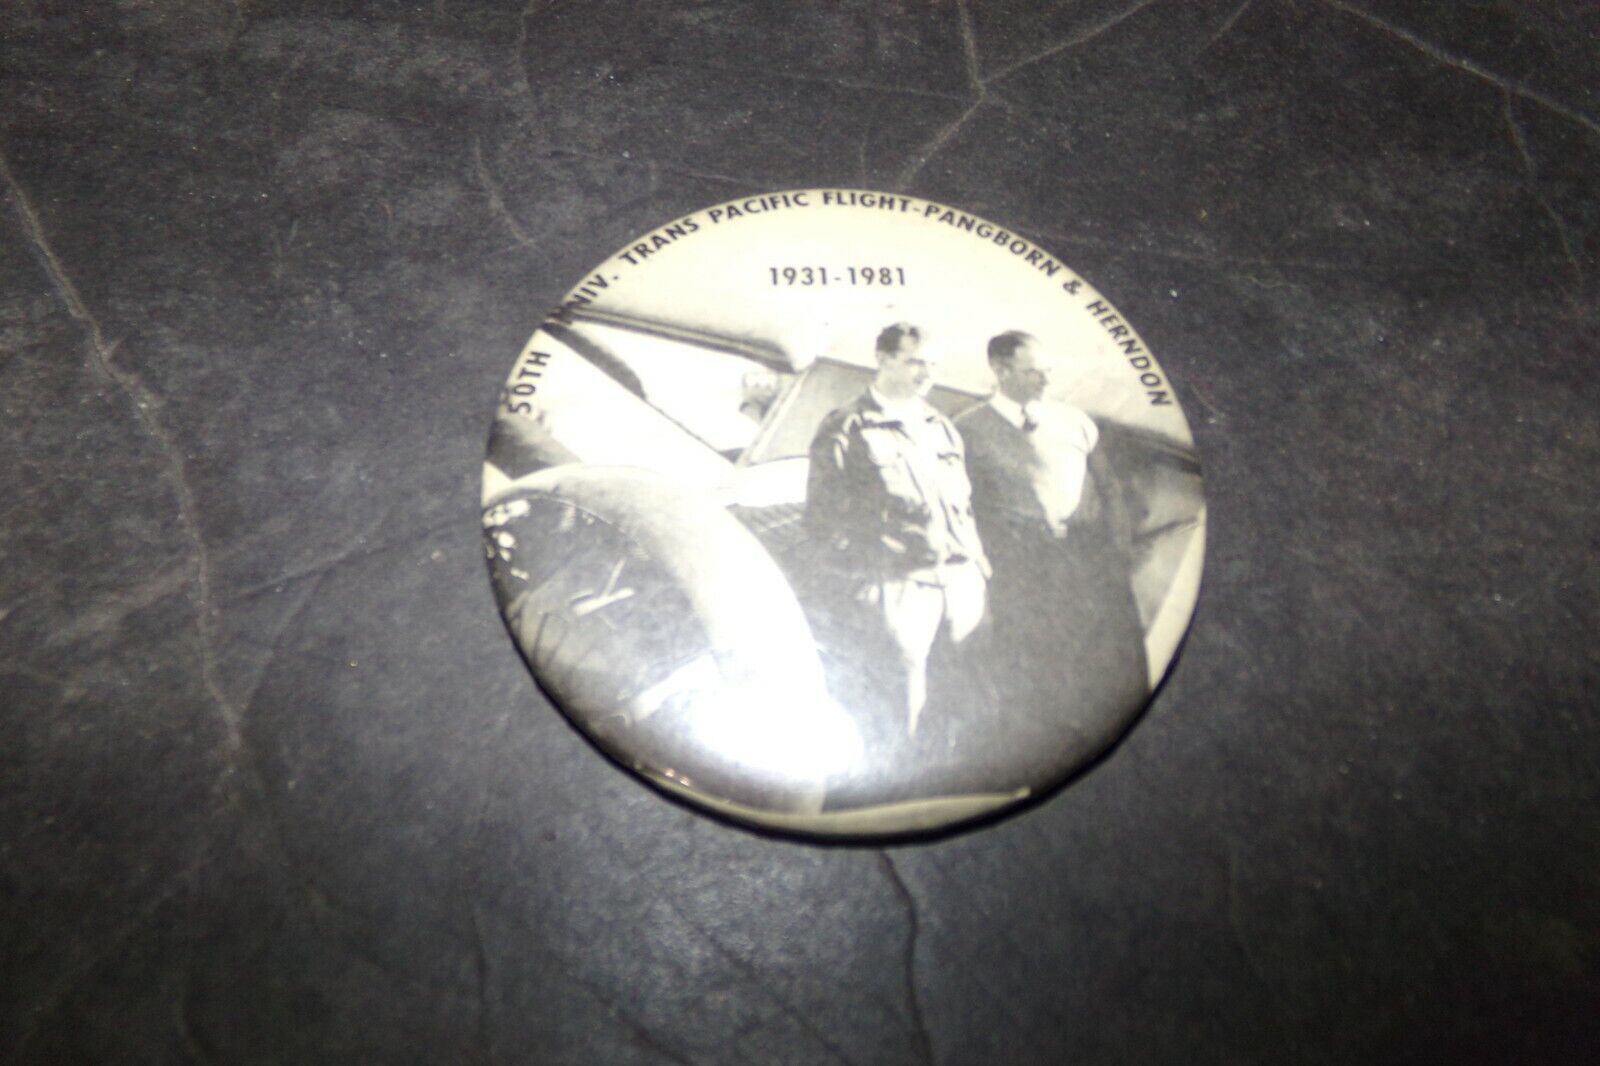 Vintage Button Pin Clyde Pangborn & Hugh Herndon First Trans Pacific Flight 50th